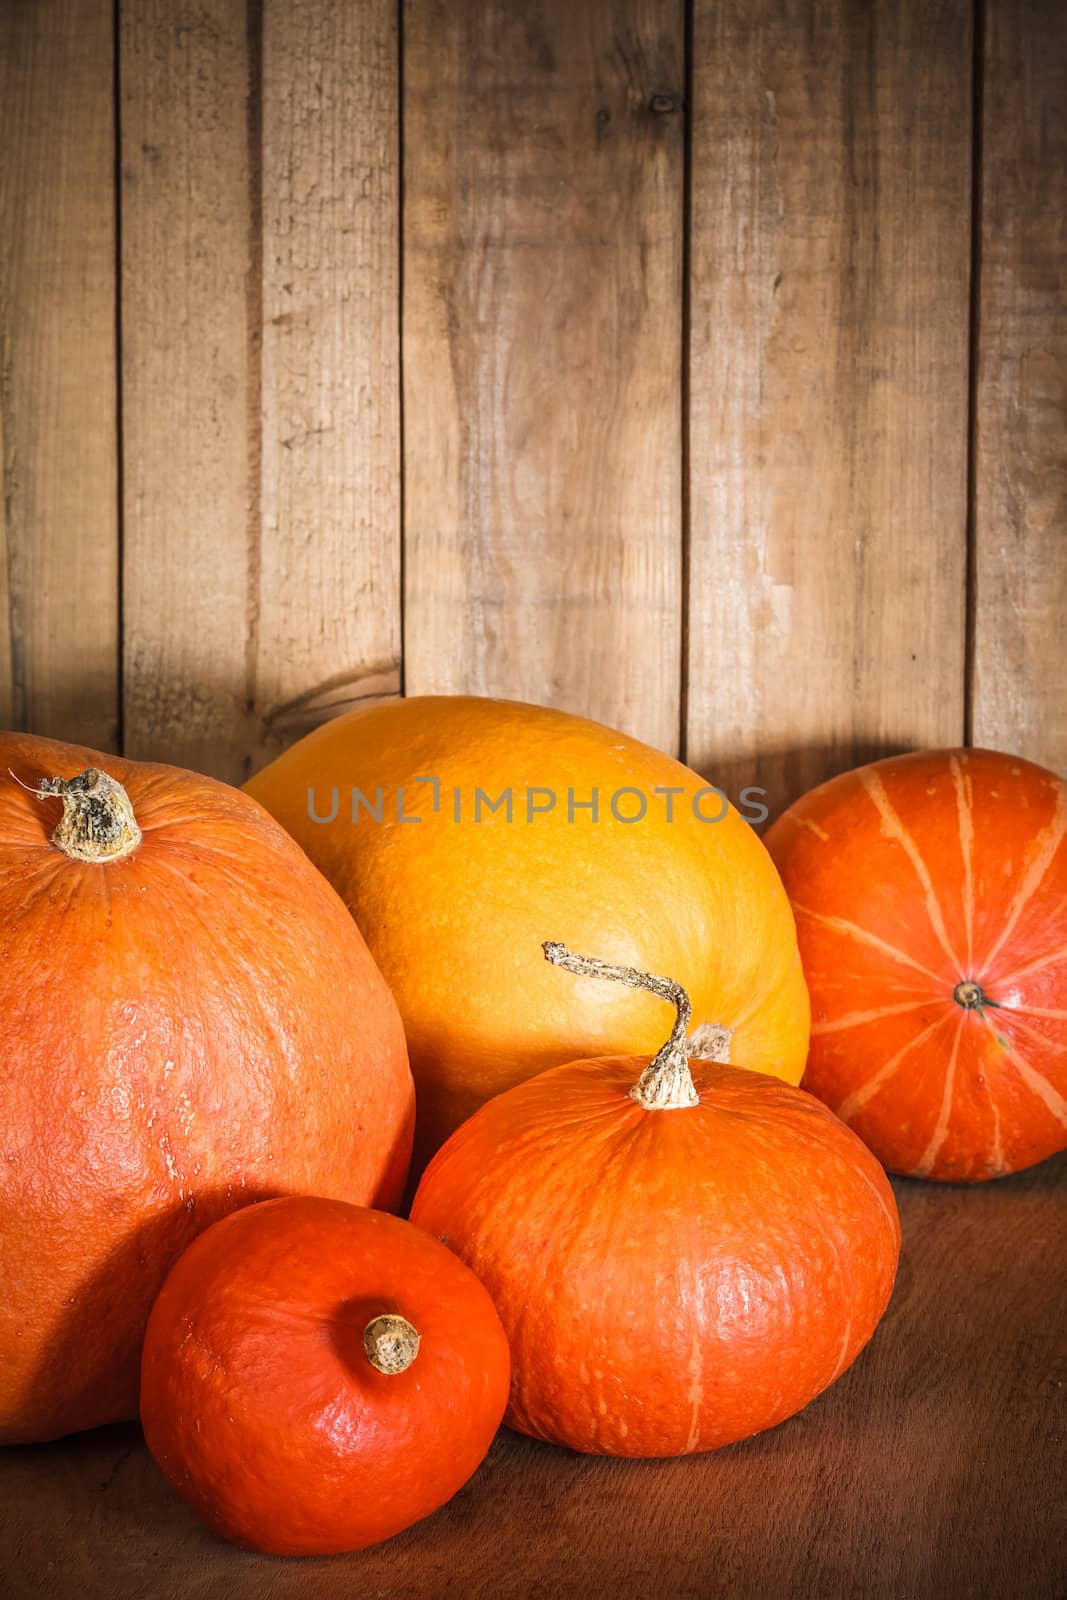 Pumpkins on grunge wooden backdrop background by ryhor